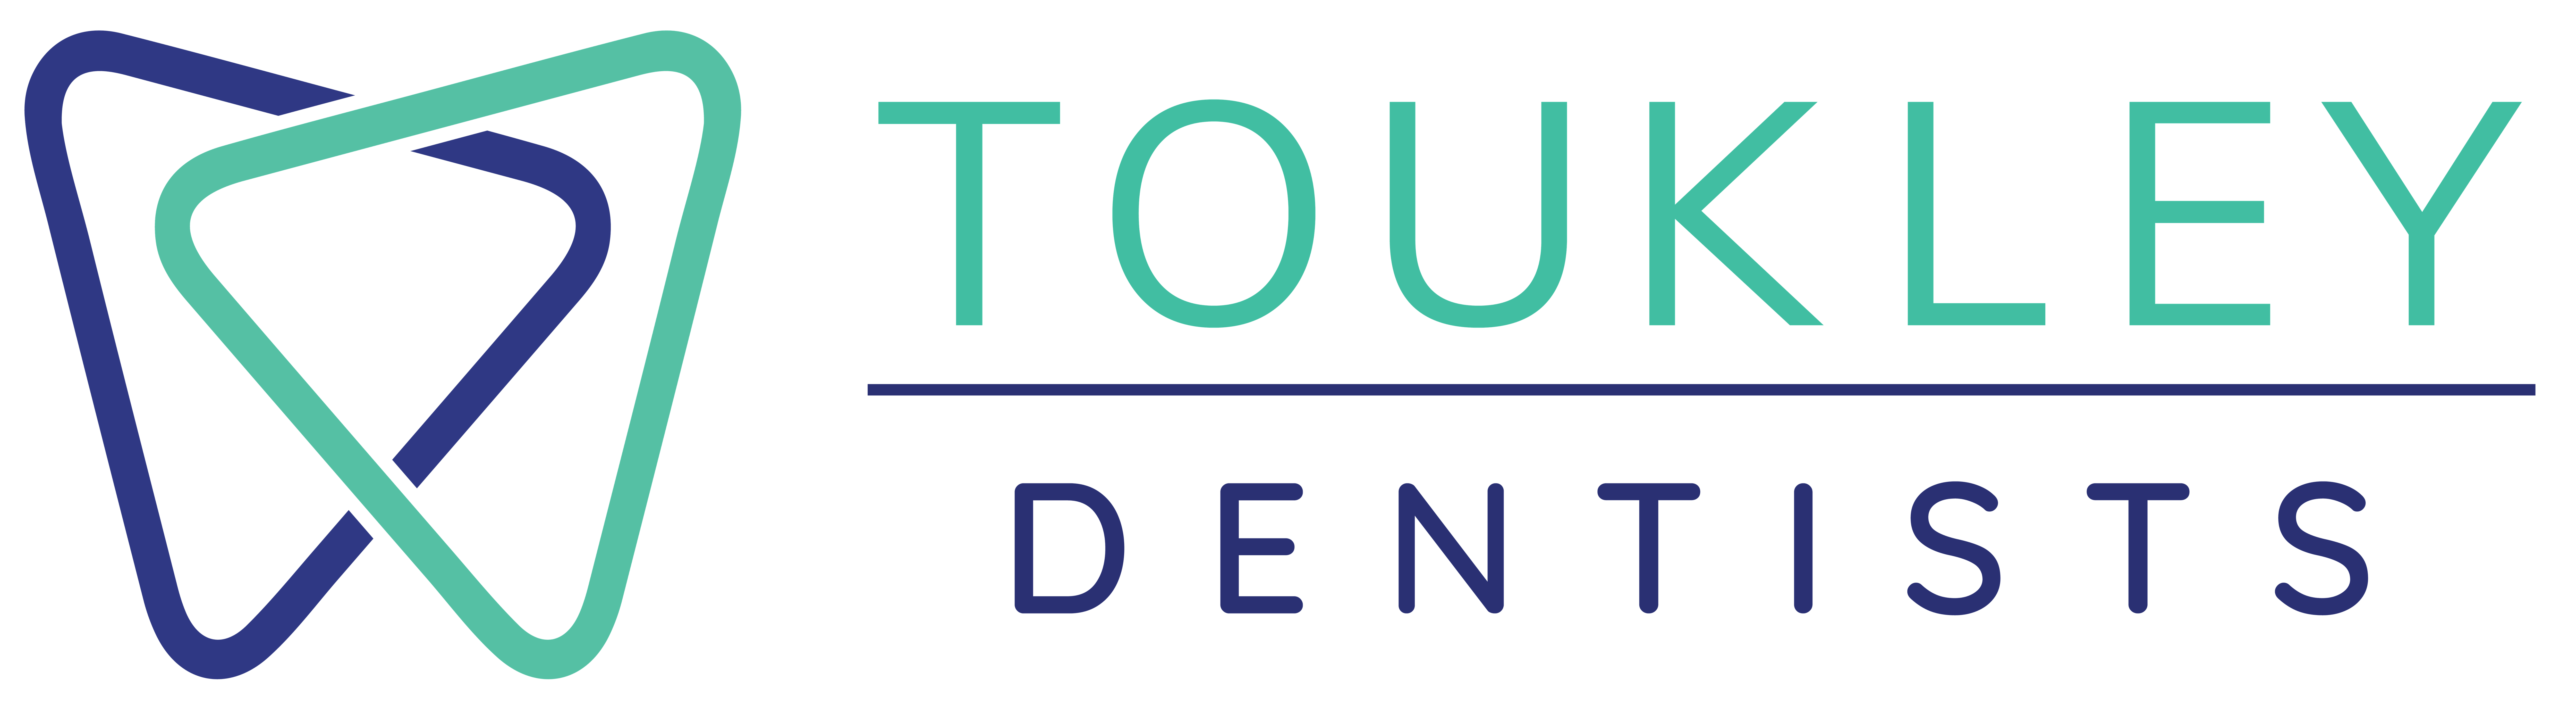 Toukley Dentists